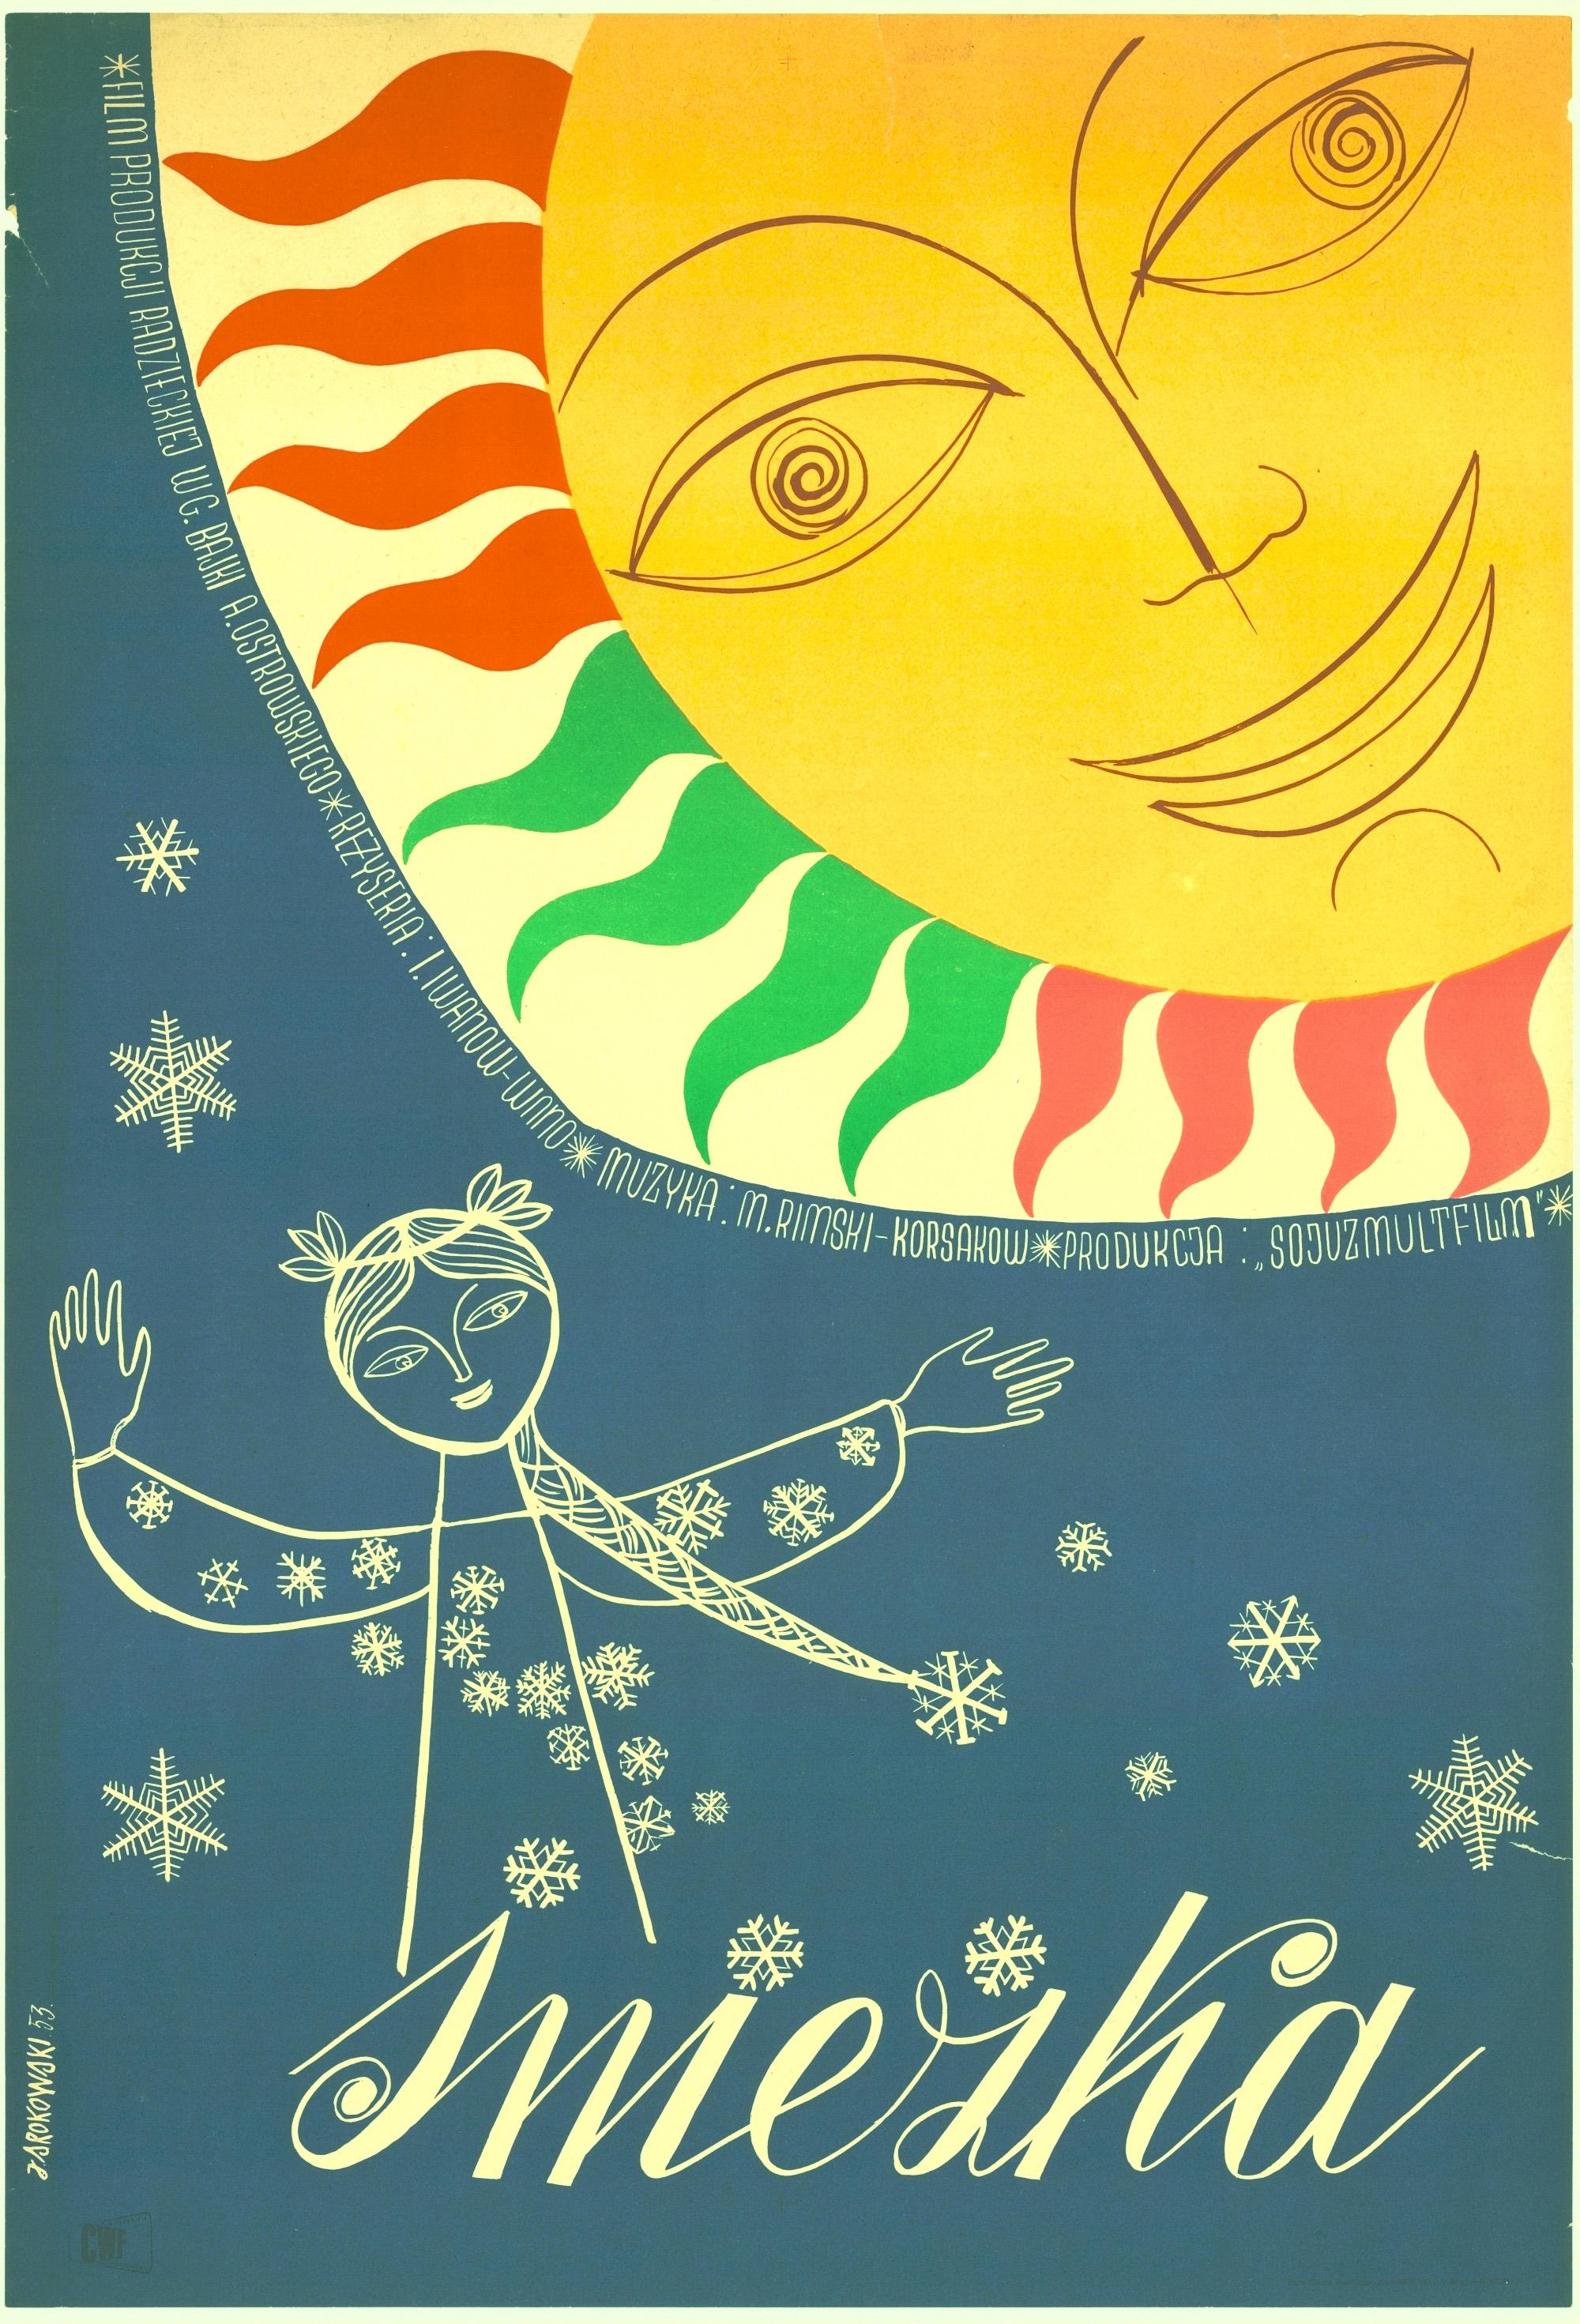 Original Polish Poster for Sniezka (eng. Snowball) movie. Beautifull artwork by polish illustrator Jerzy Srokowski. 1953, printed by CWF (Polish film distribution company)
Minor looses to the edges.